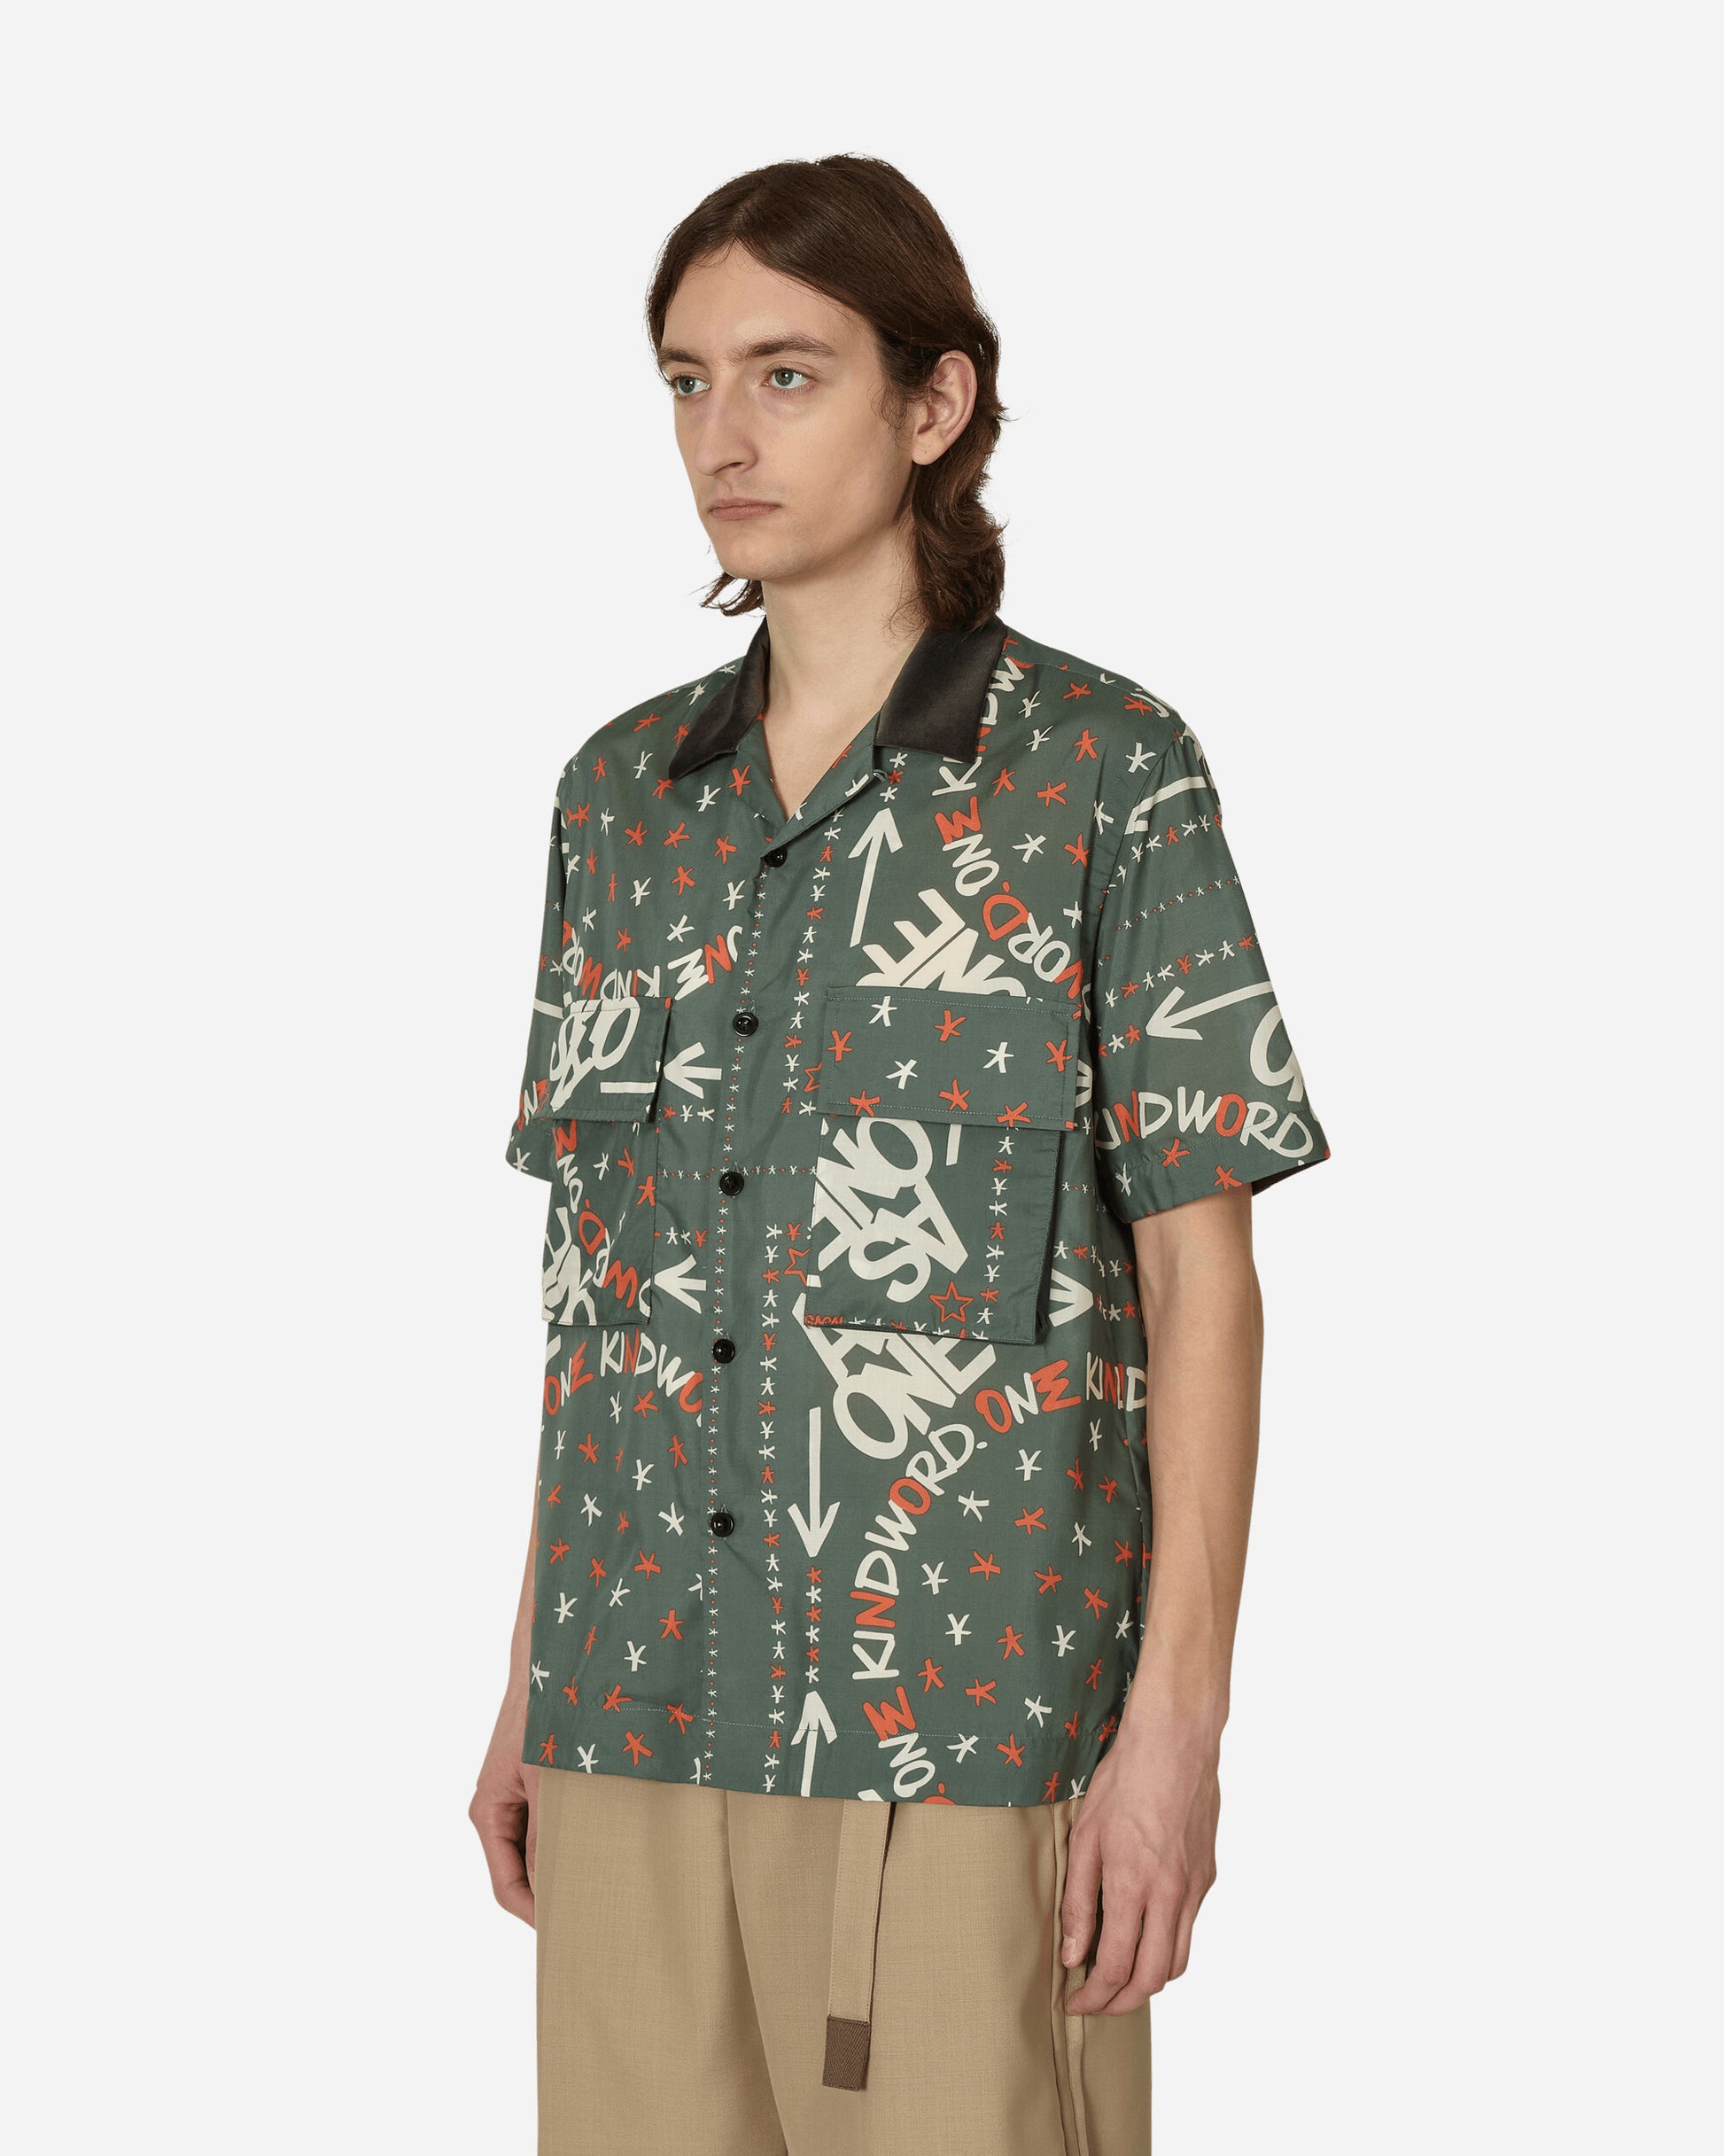 Sacai Eric Haze / Bandana Print Shirt Green Shirts Shortsleeve Shirt 23-02980M 551